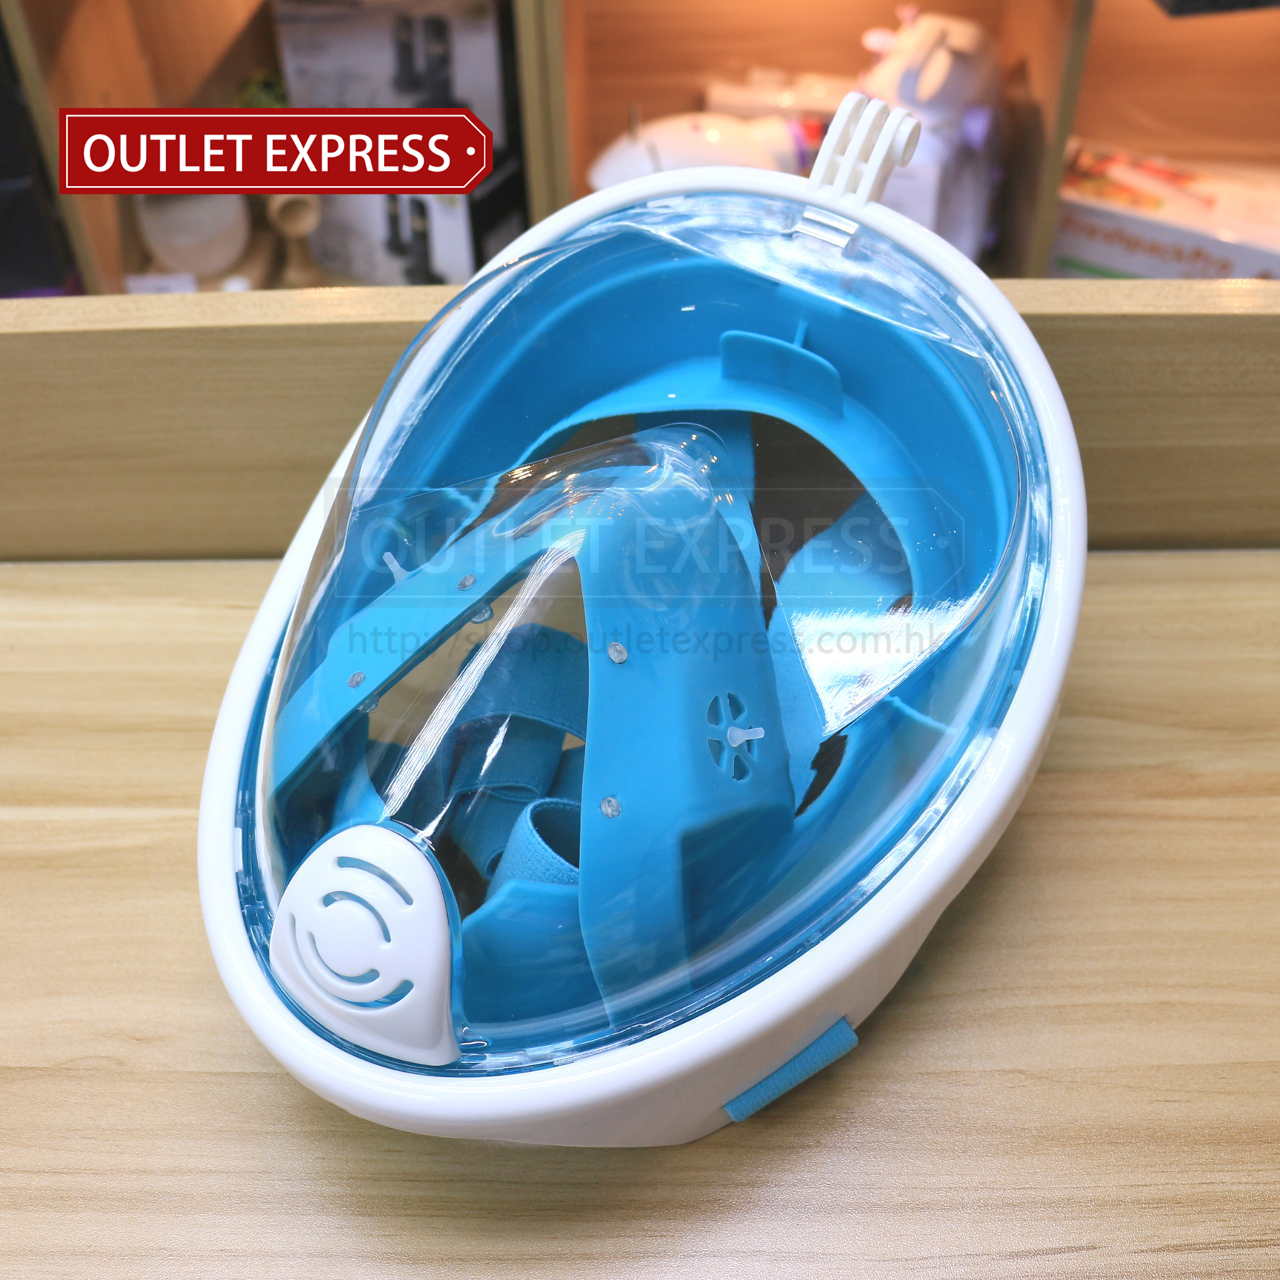 DRY DOP 全乾式浮潛潛水面罩(藍色)- Outlet Express HK生活百貨城實拍相片